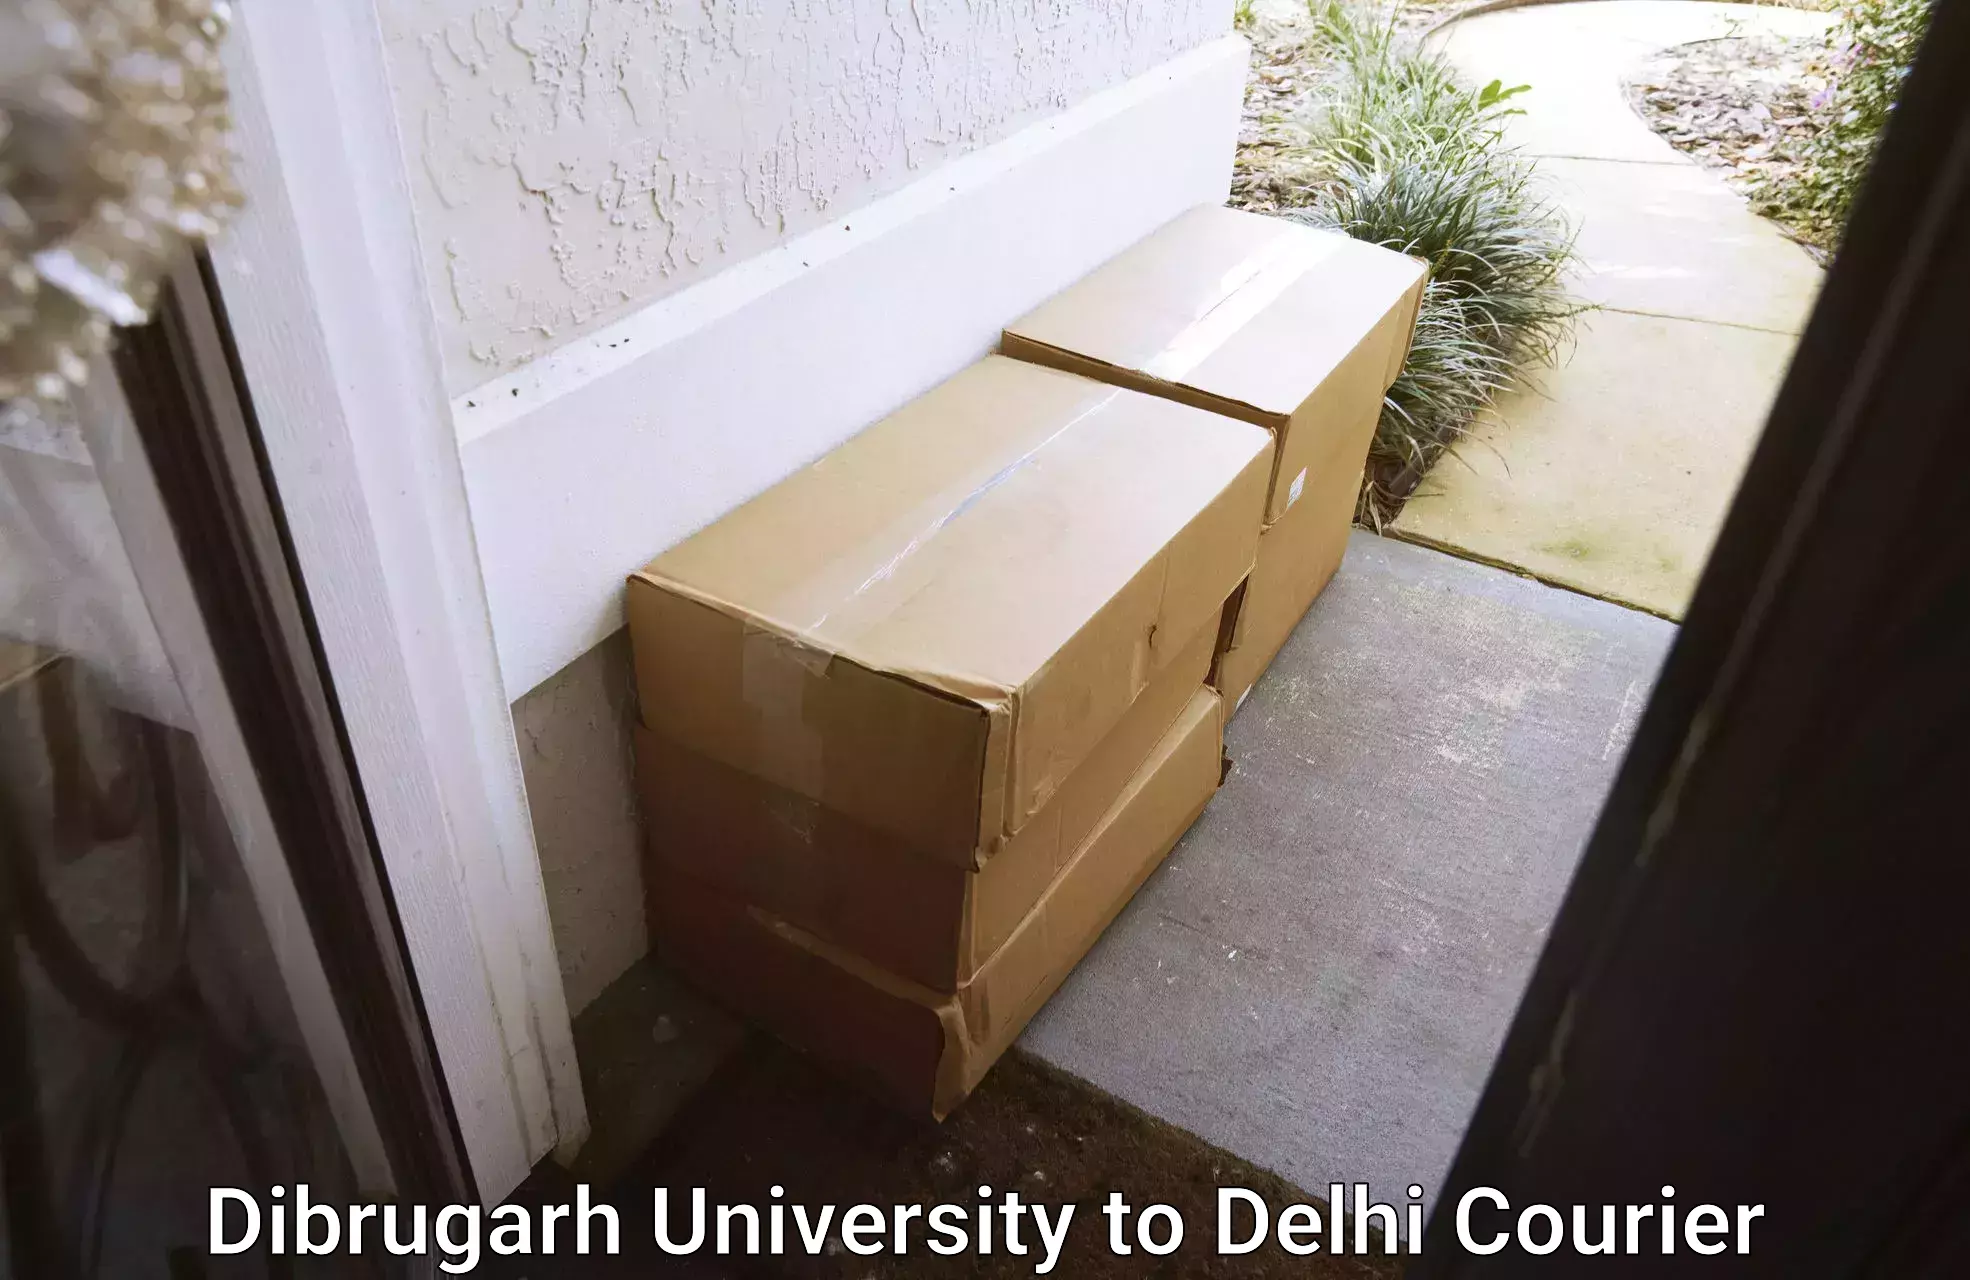 Express logistics providers Dibrugarh University to NCR